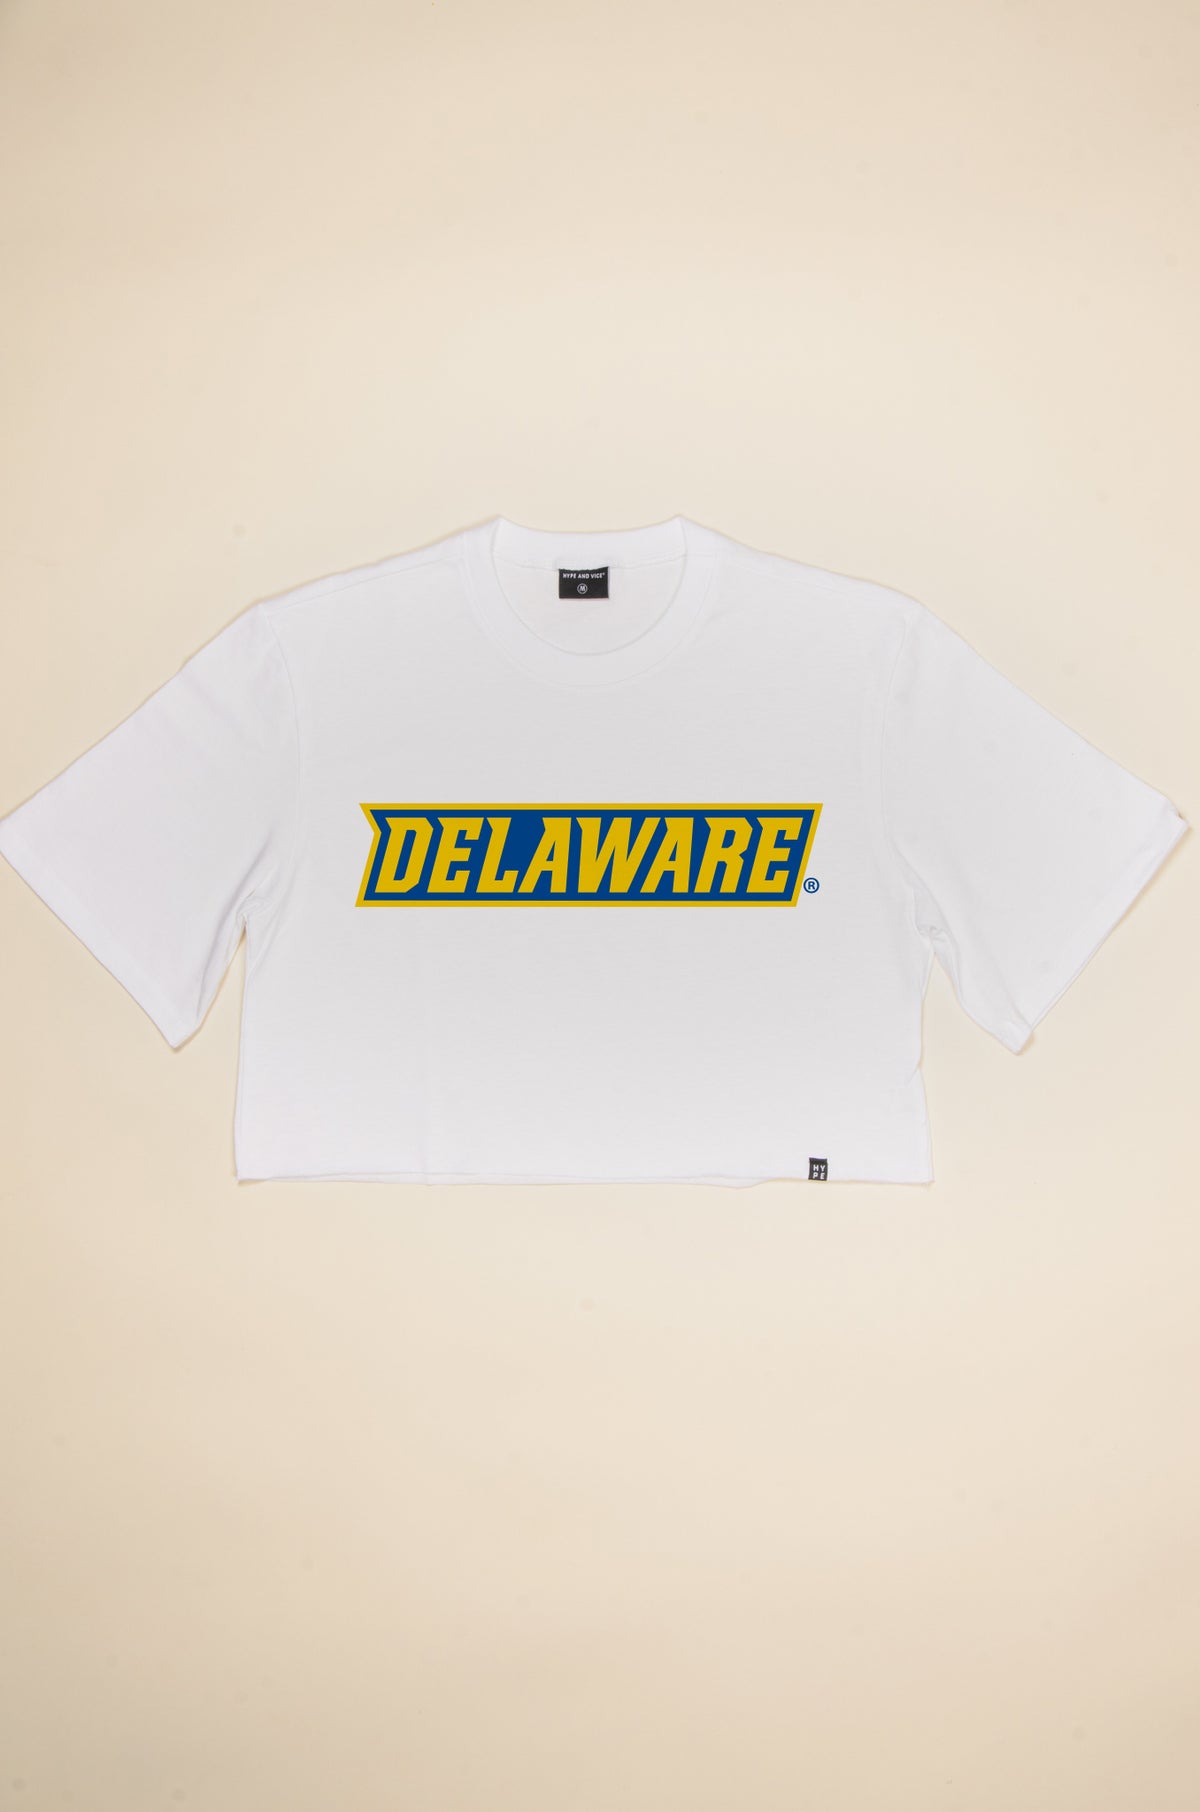 Delaware Touchdown Tee